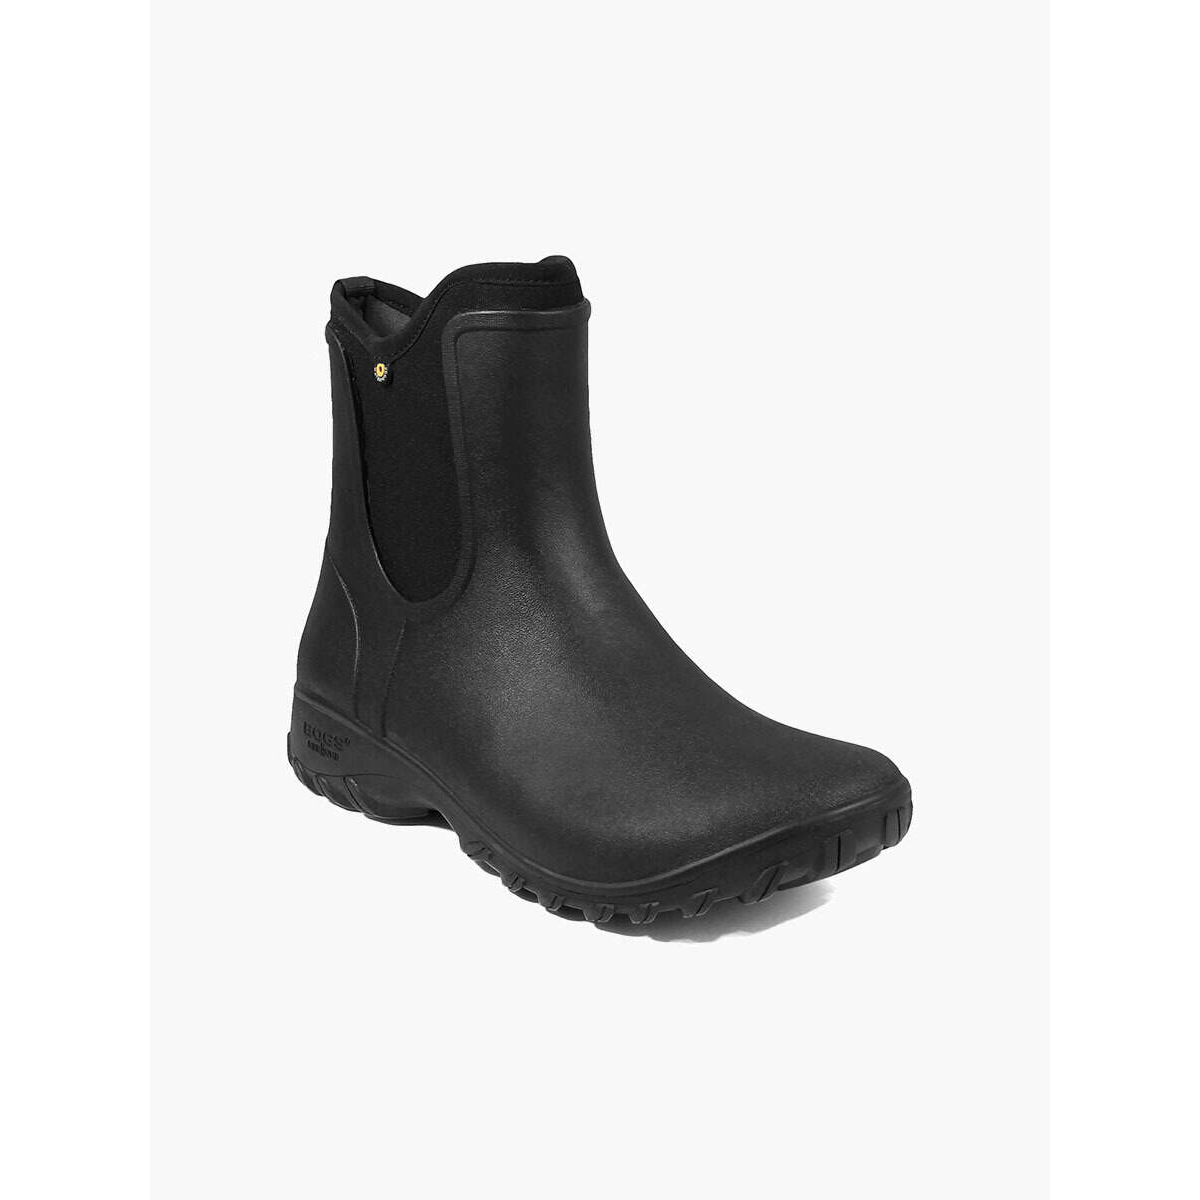 BOGS Women's Sauvie Slip On Waterproof Rain Boots Black - 72203-001 - BLACK, 9-M